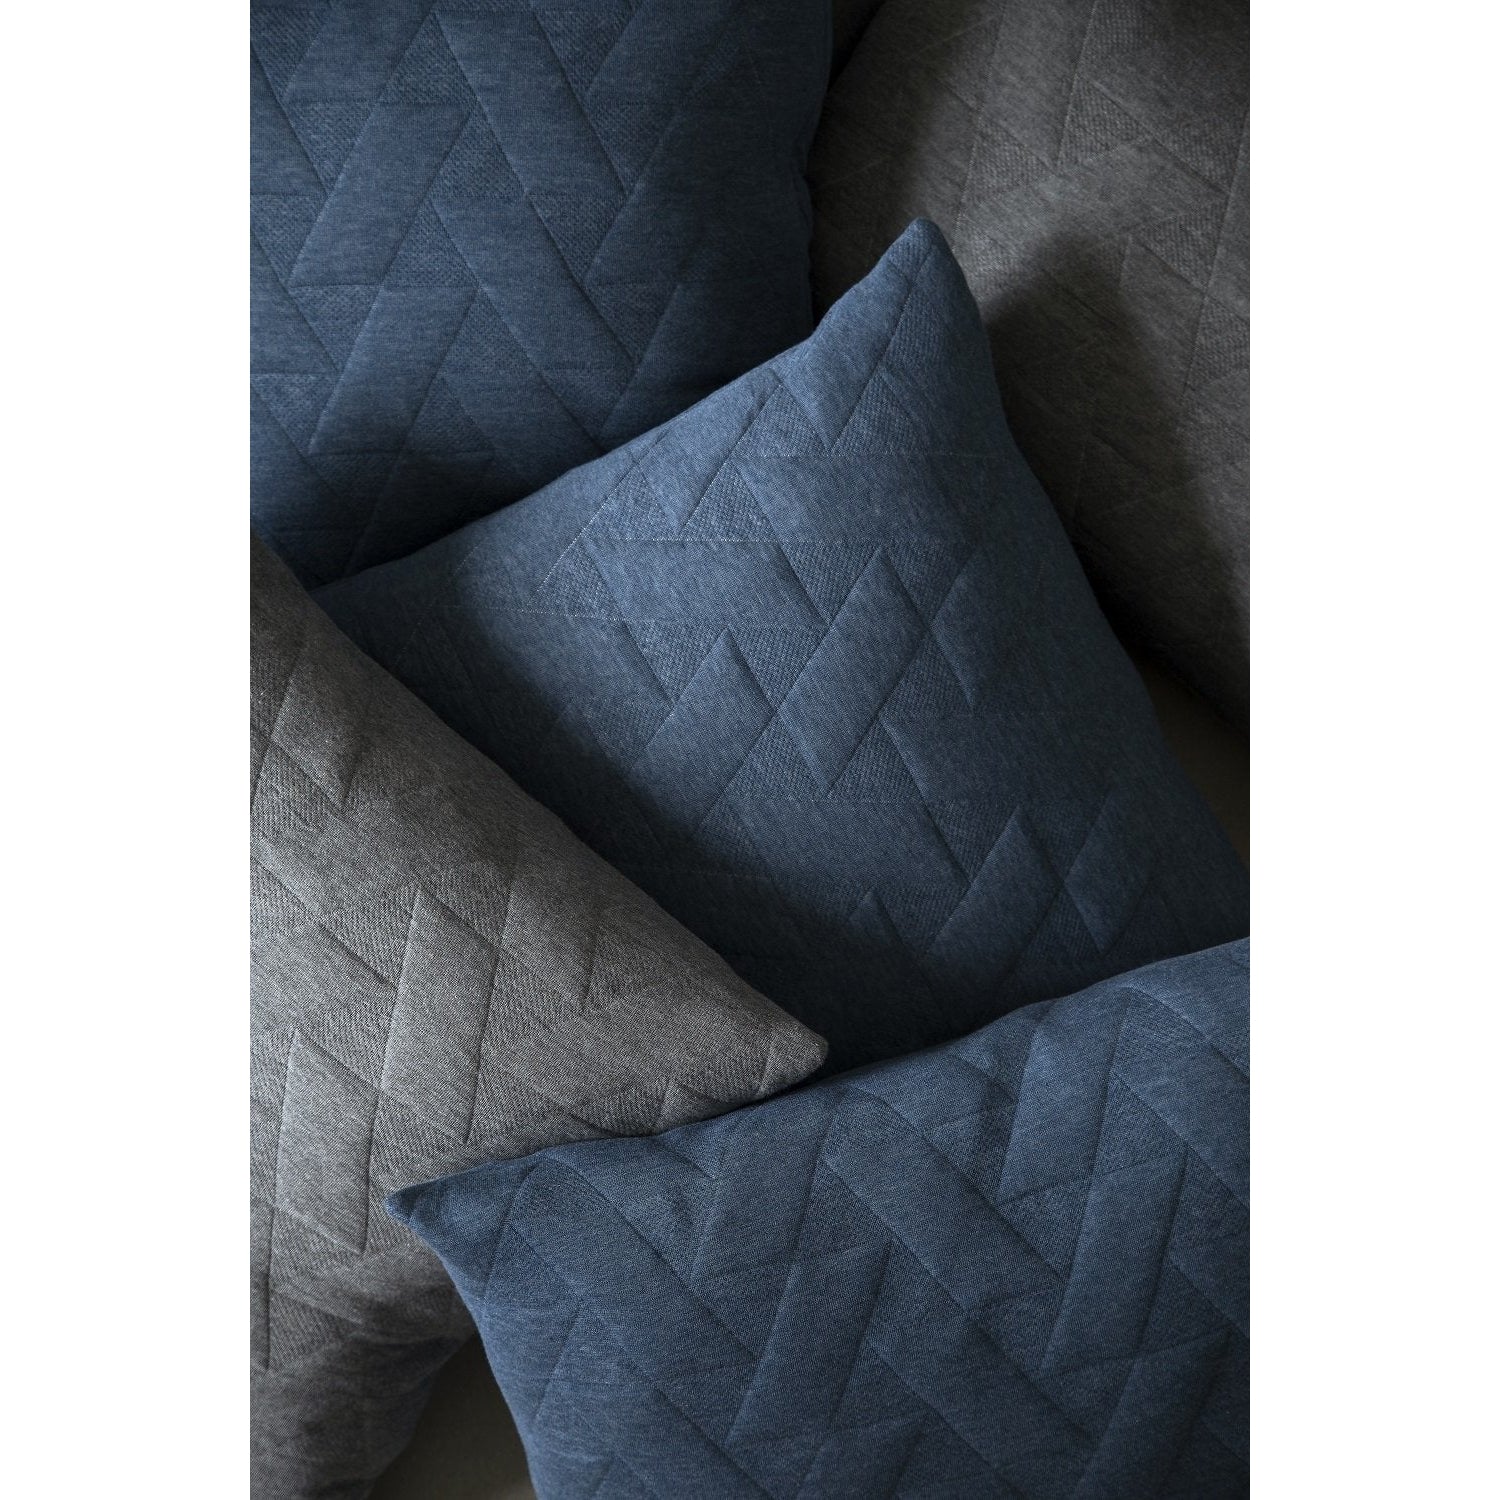 Architectmade Finn Juhl Pattern Cushion, Grey 40x60